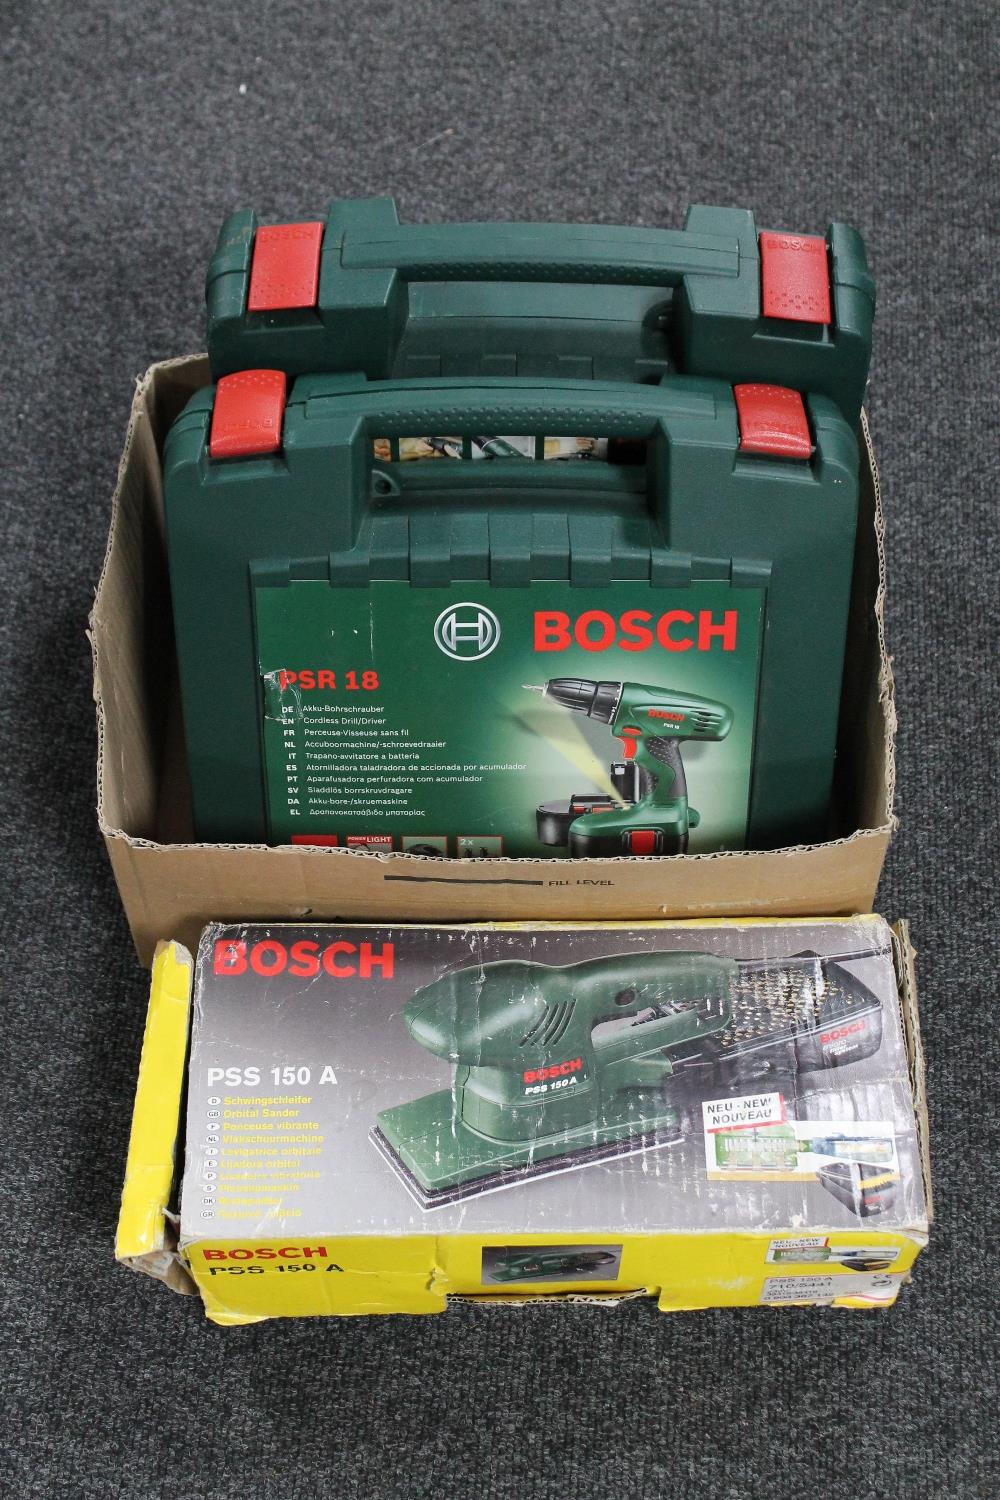 A box containing Bosch sander,